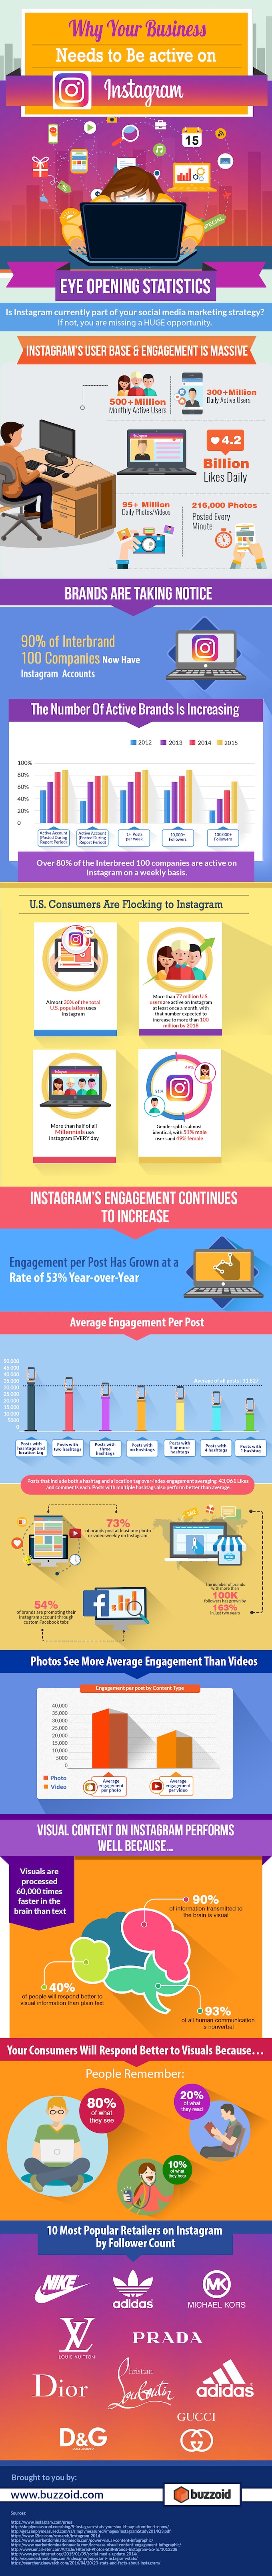 instagram-stats-infographic